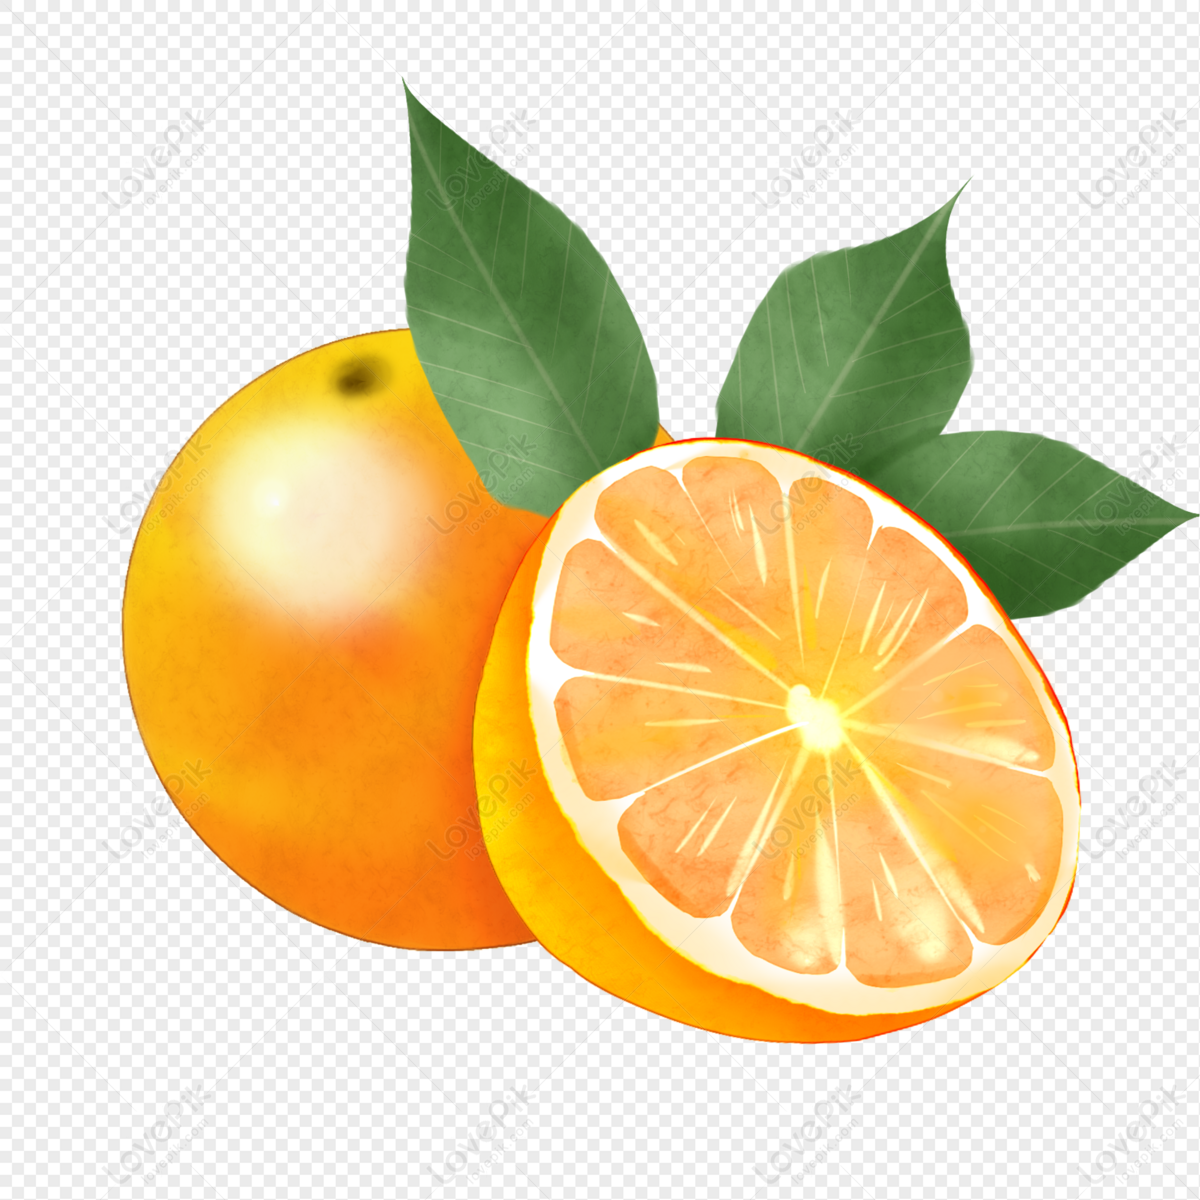 Cartoon Fruit Orange Illustration PNG Free Download And Clipart Image For  Free Download - Lovepik | 401140063